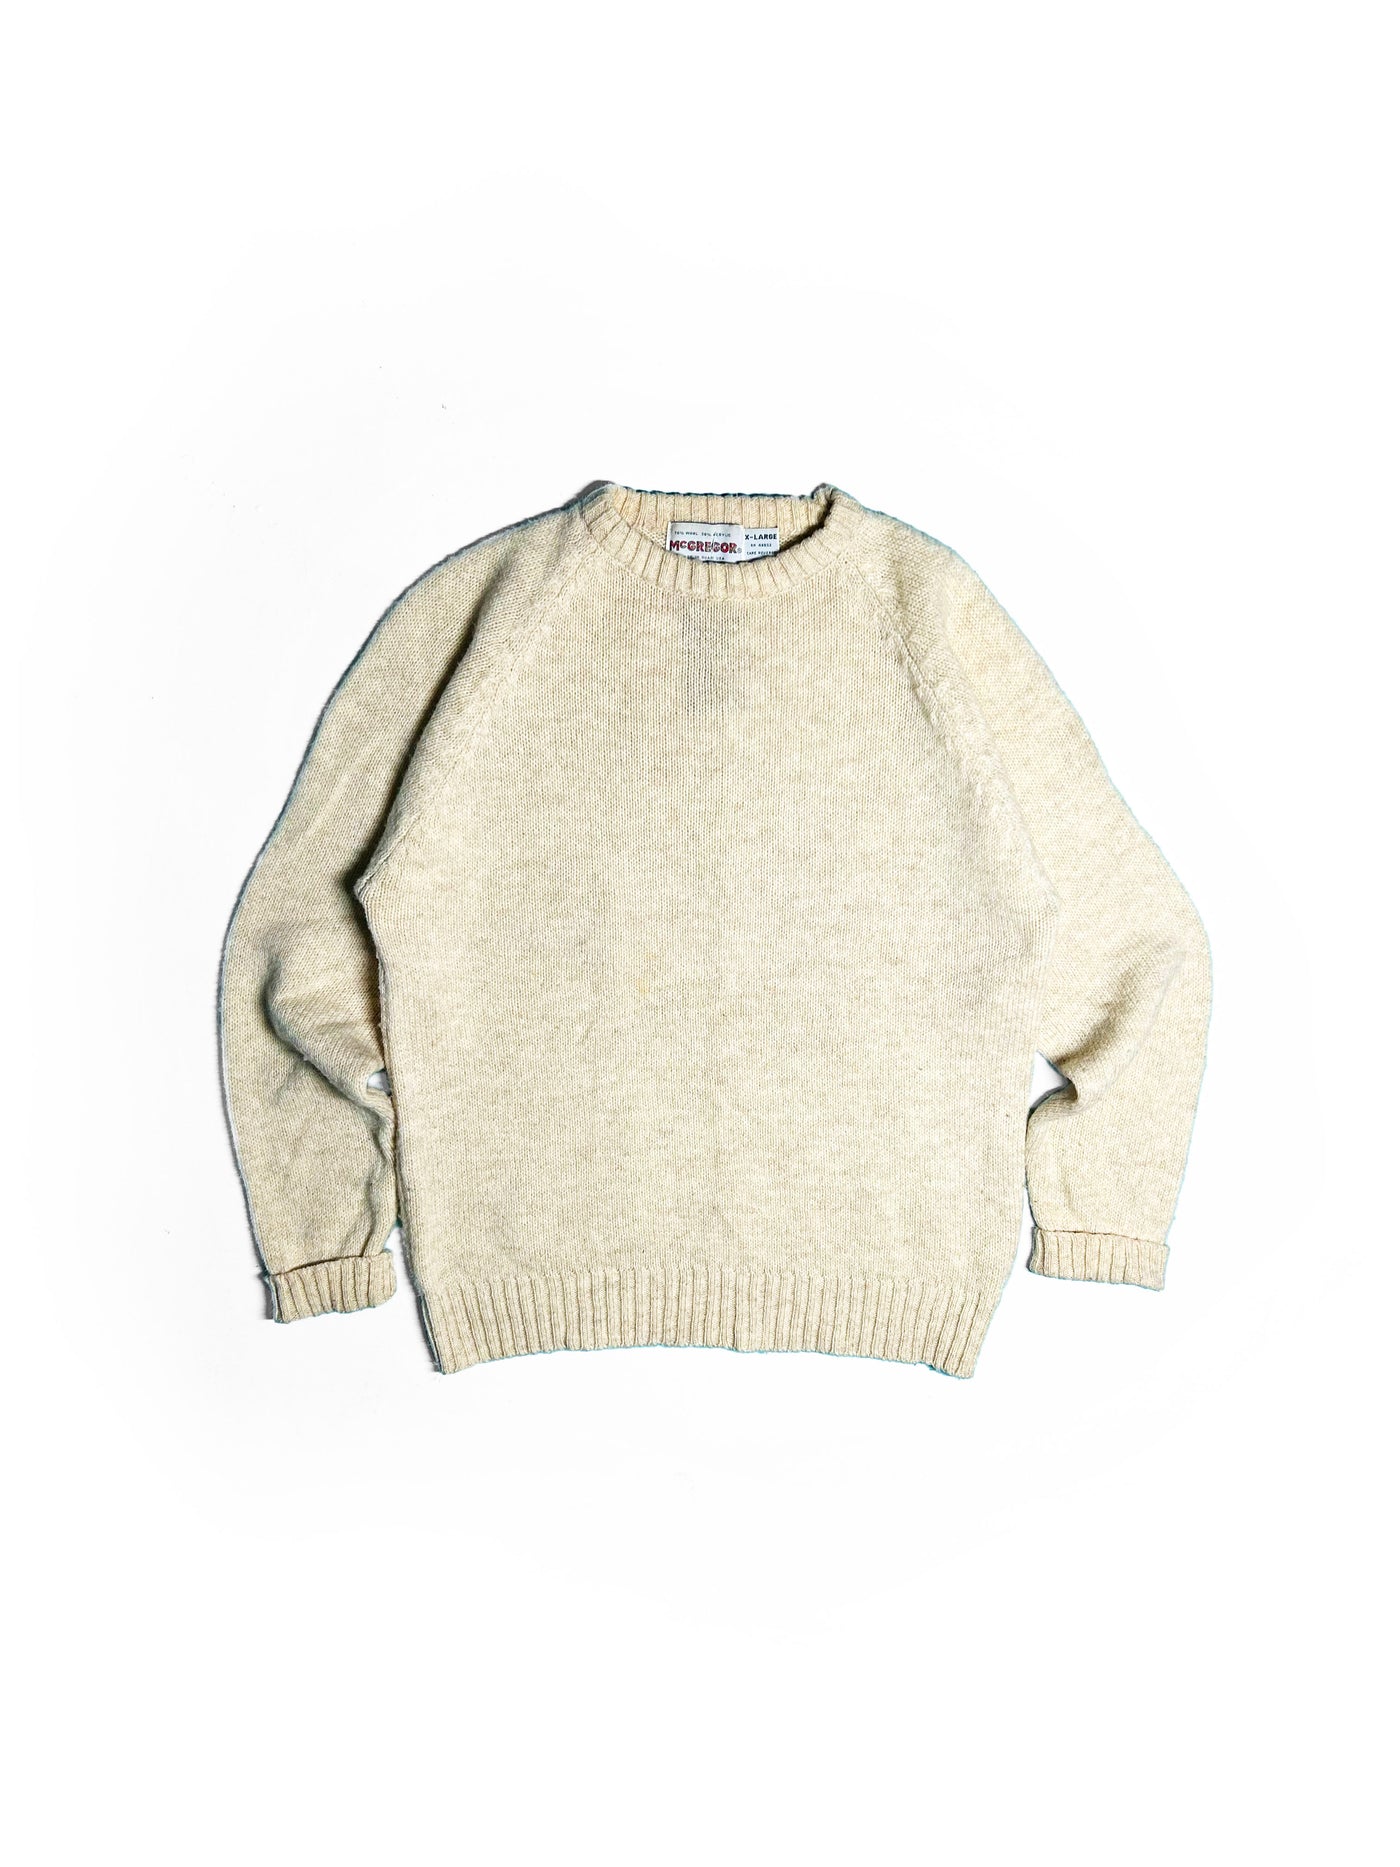 Vintage 80s McGregor Sweater